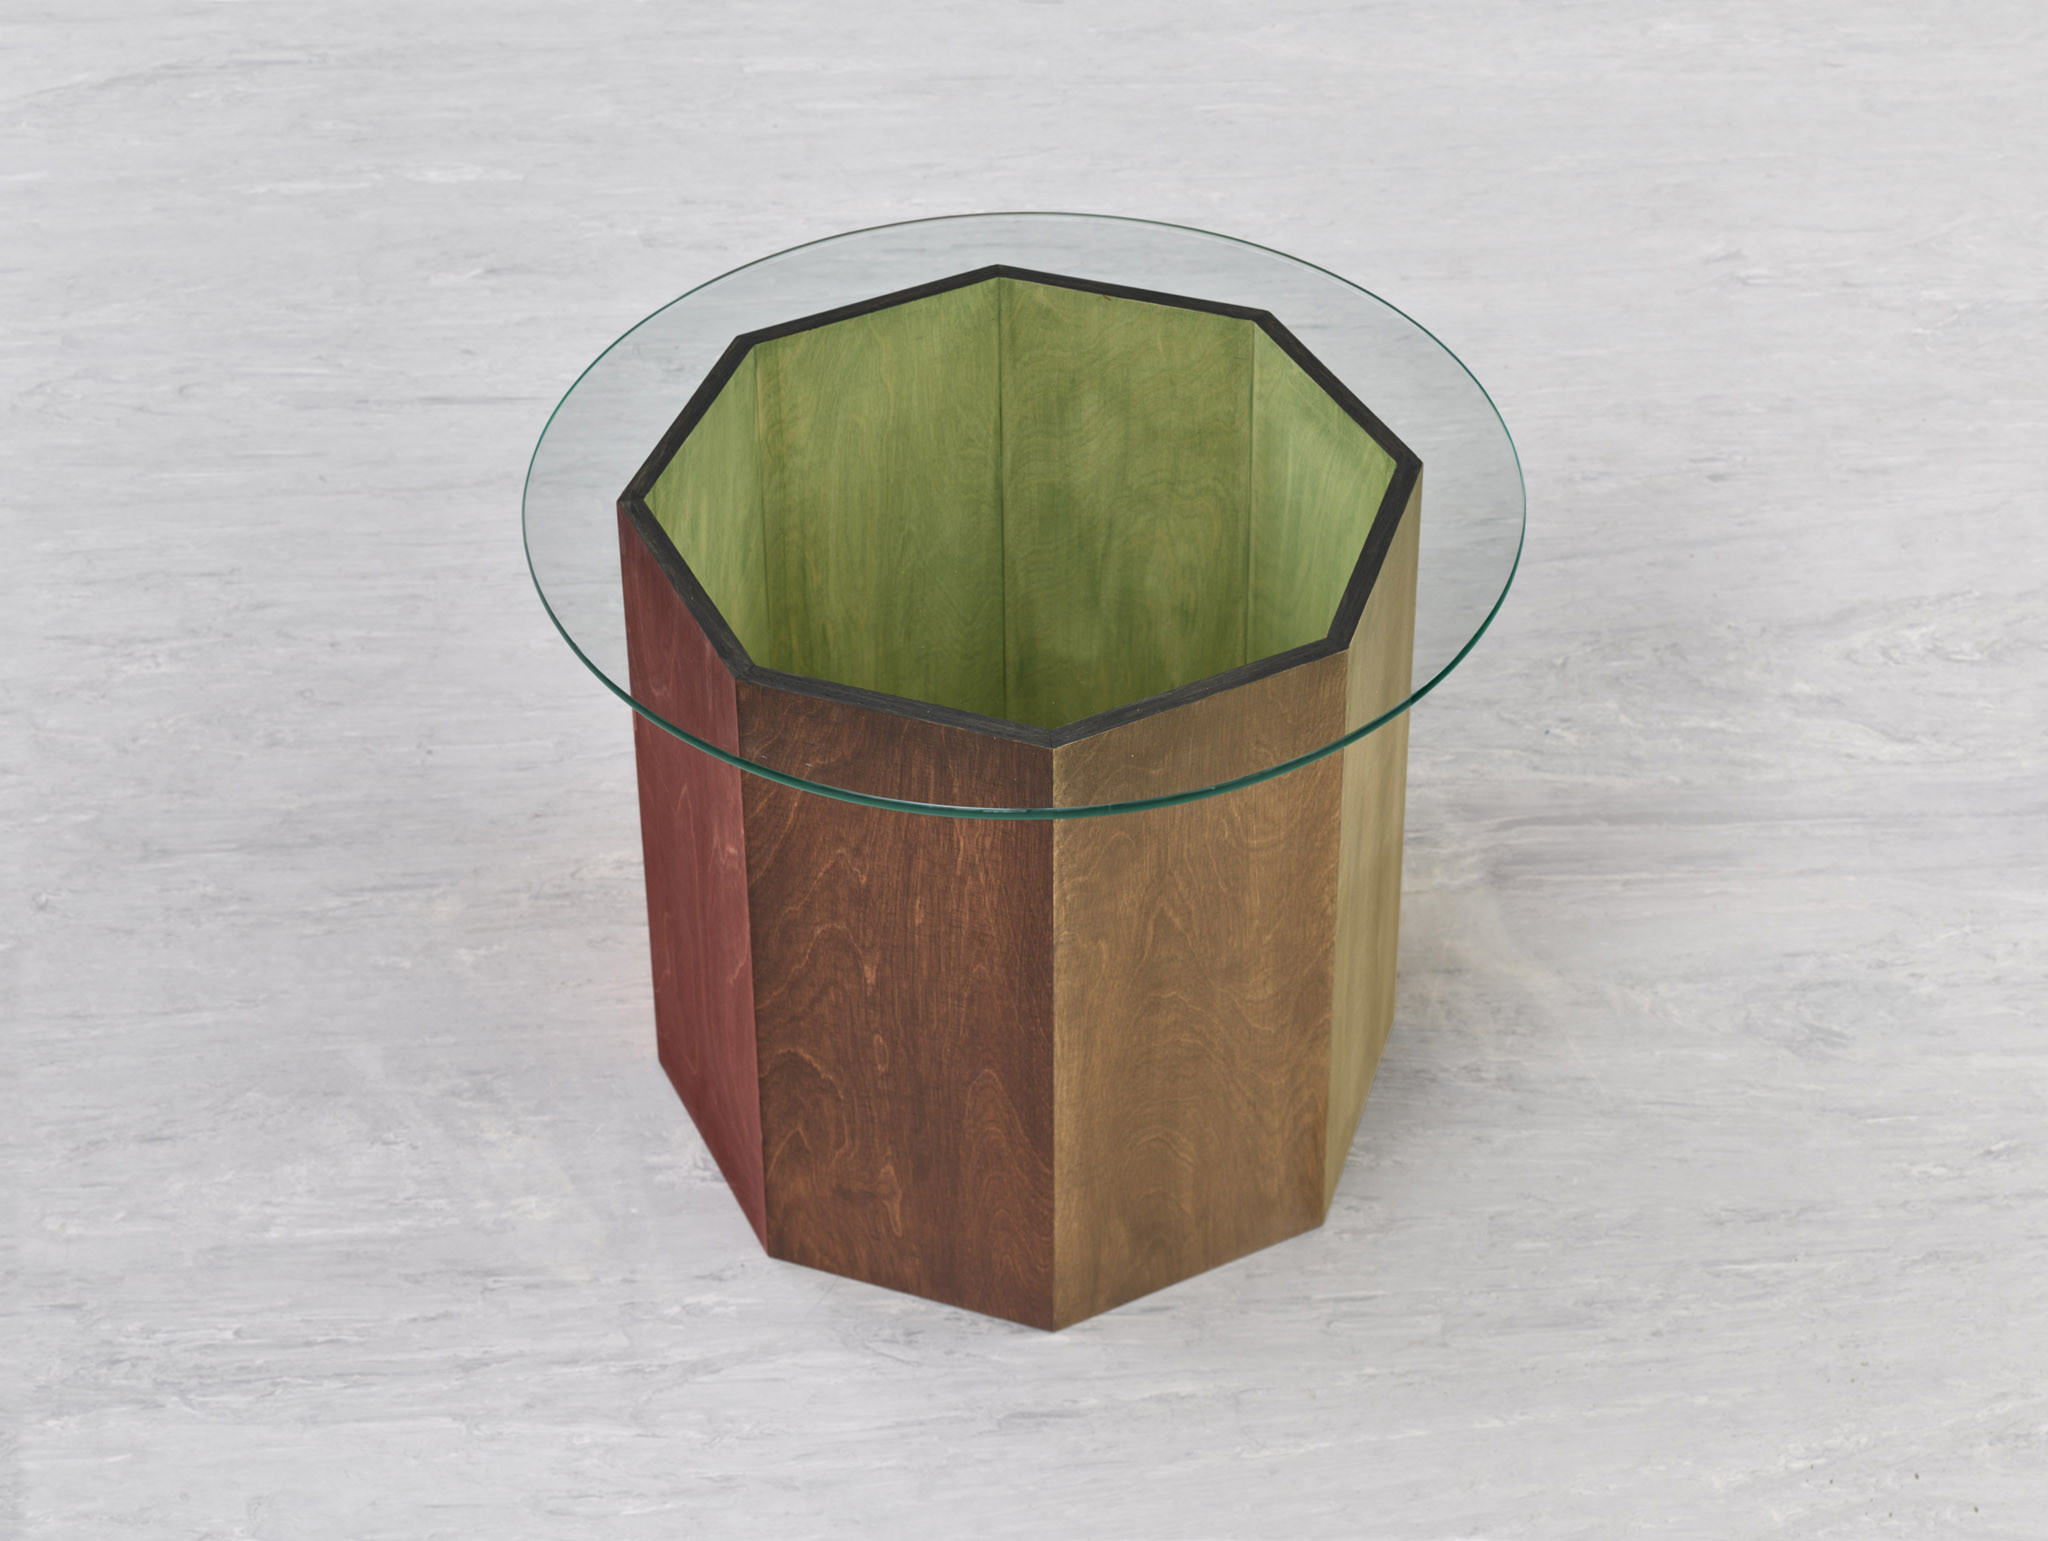 Sunah Choi, "Table Octagon", 2023, wood, color, glass, 60 x 46 x 60 cm